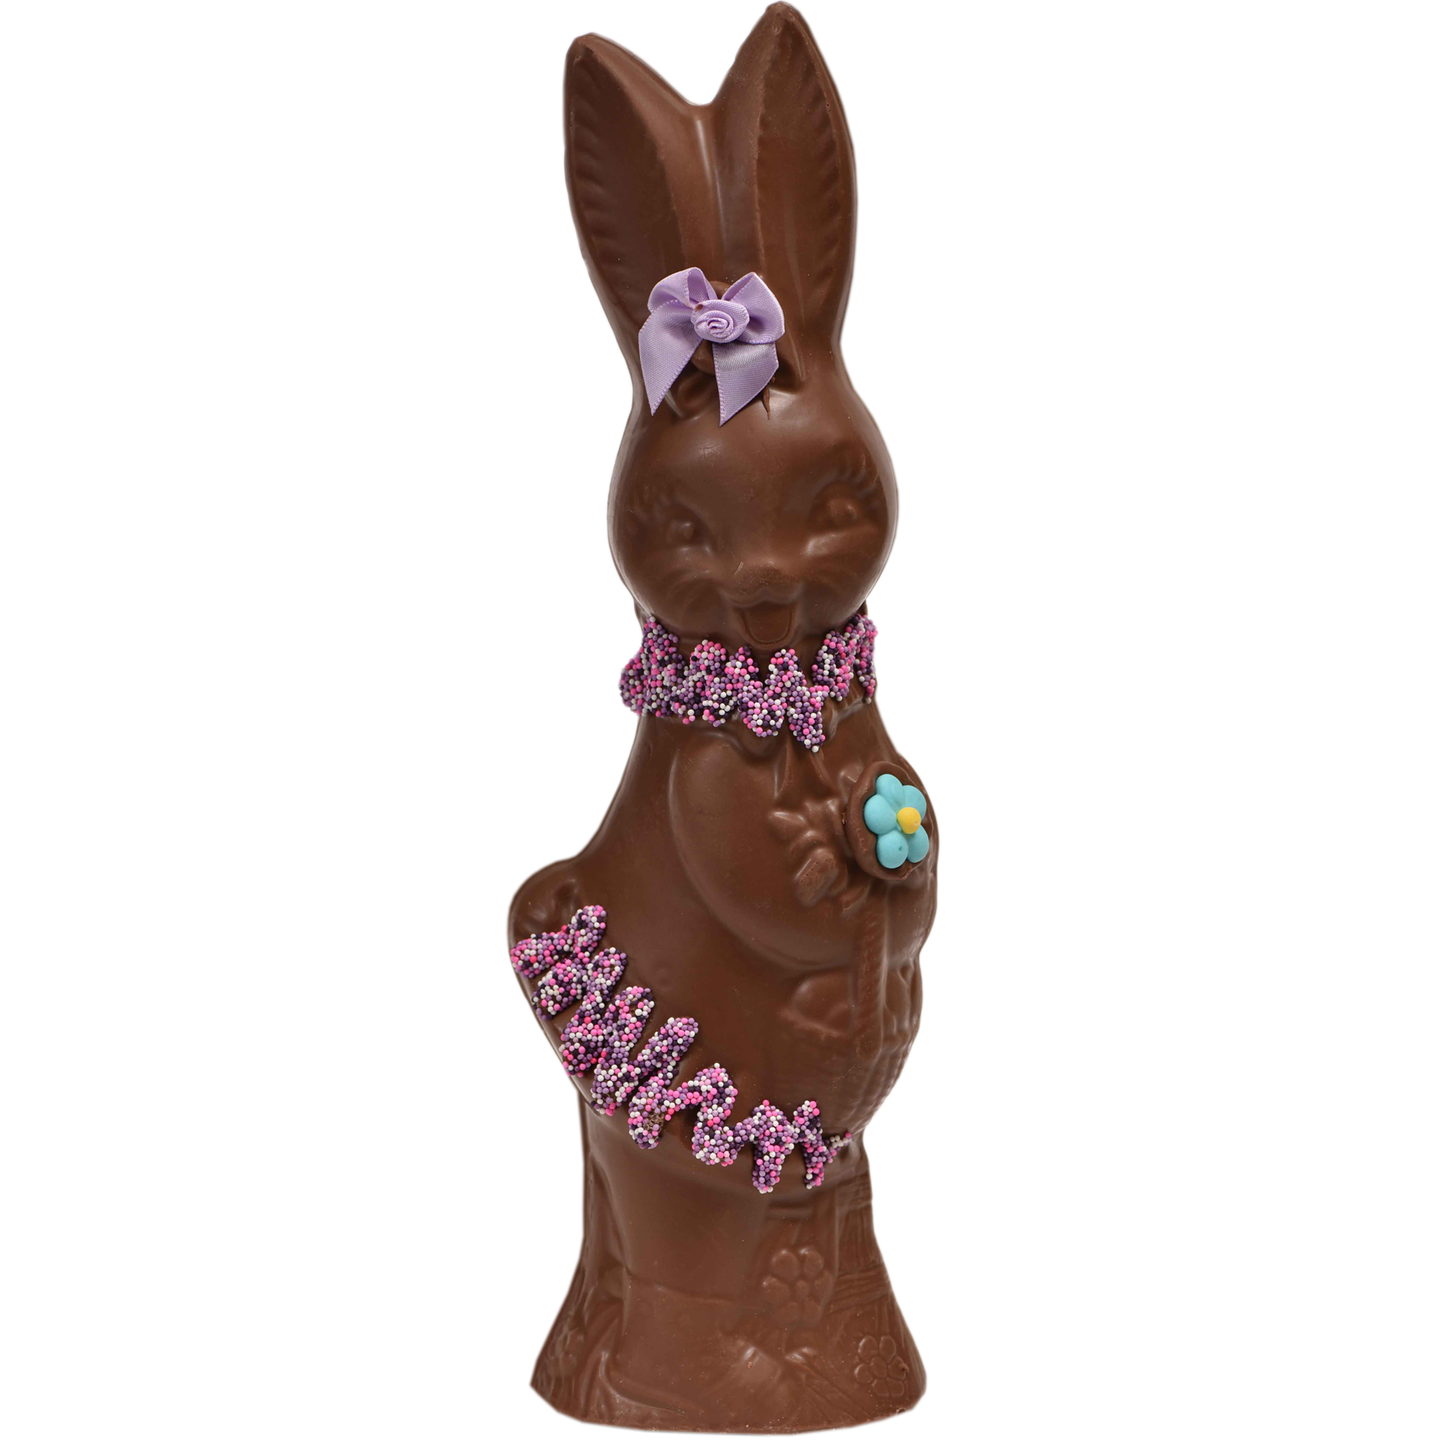 12" Milk Chocolate Easter Bunny # 38 G - "Tall Girl Bunny"